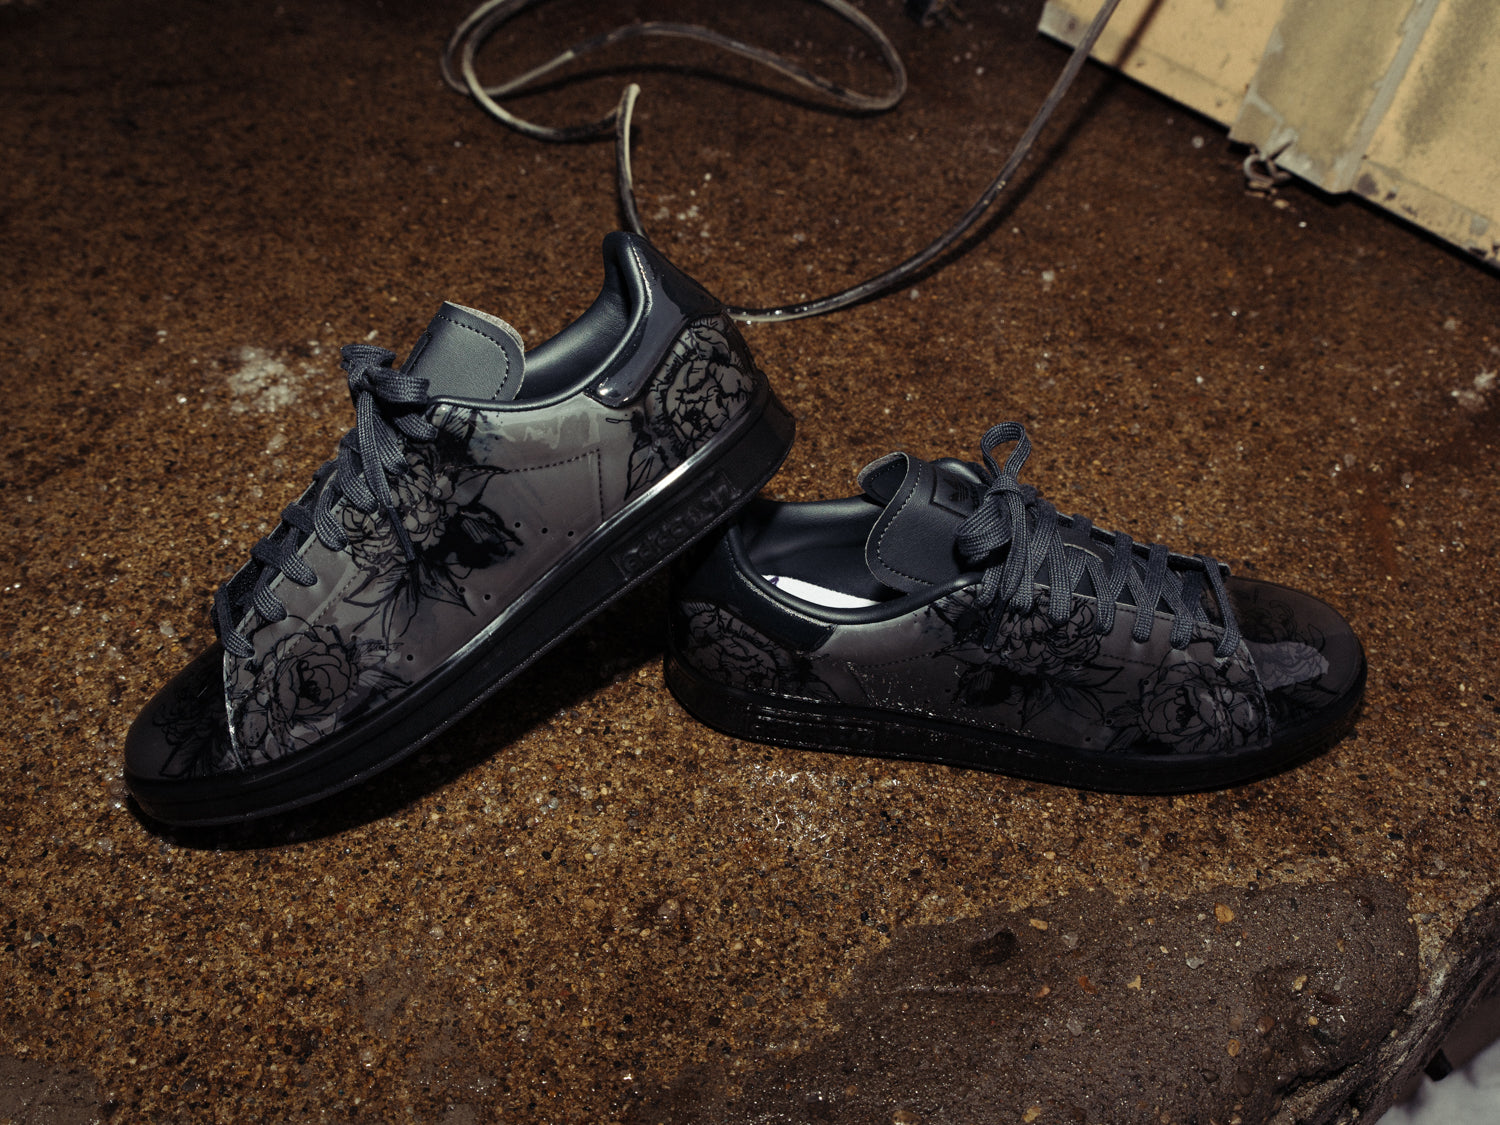 Black adidas Stan Smith Shoes